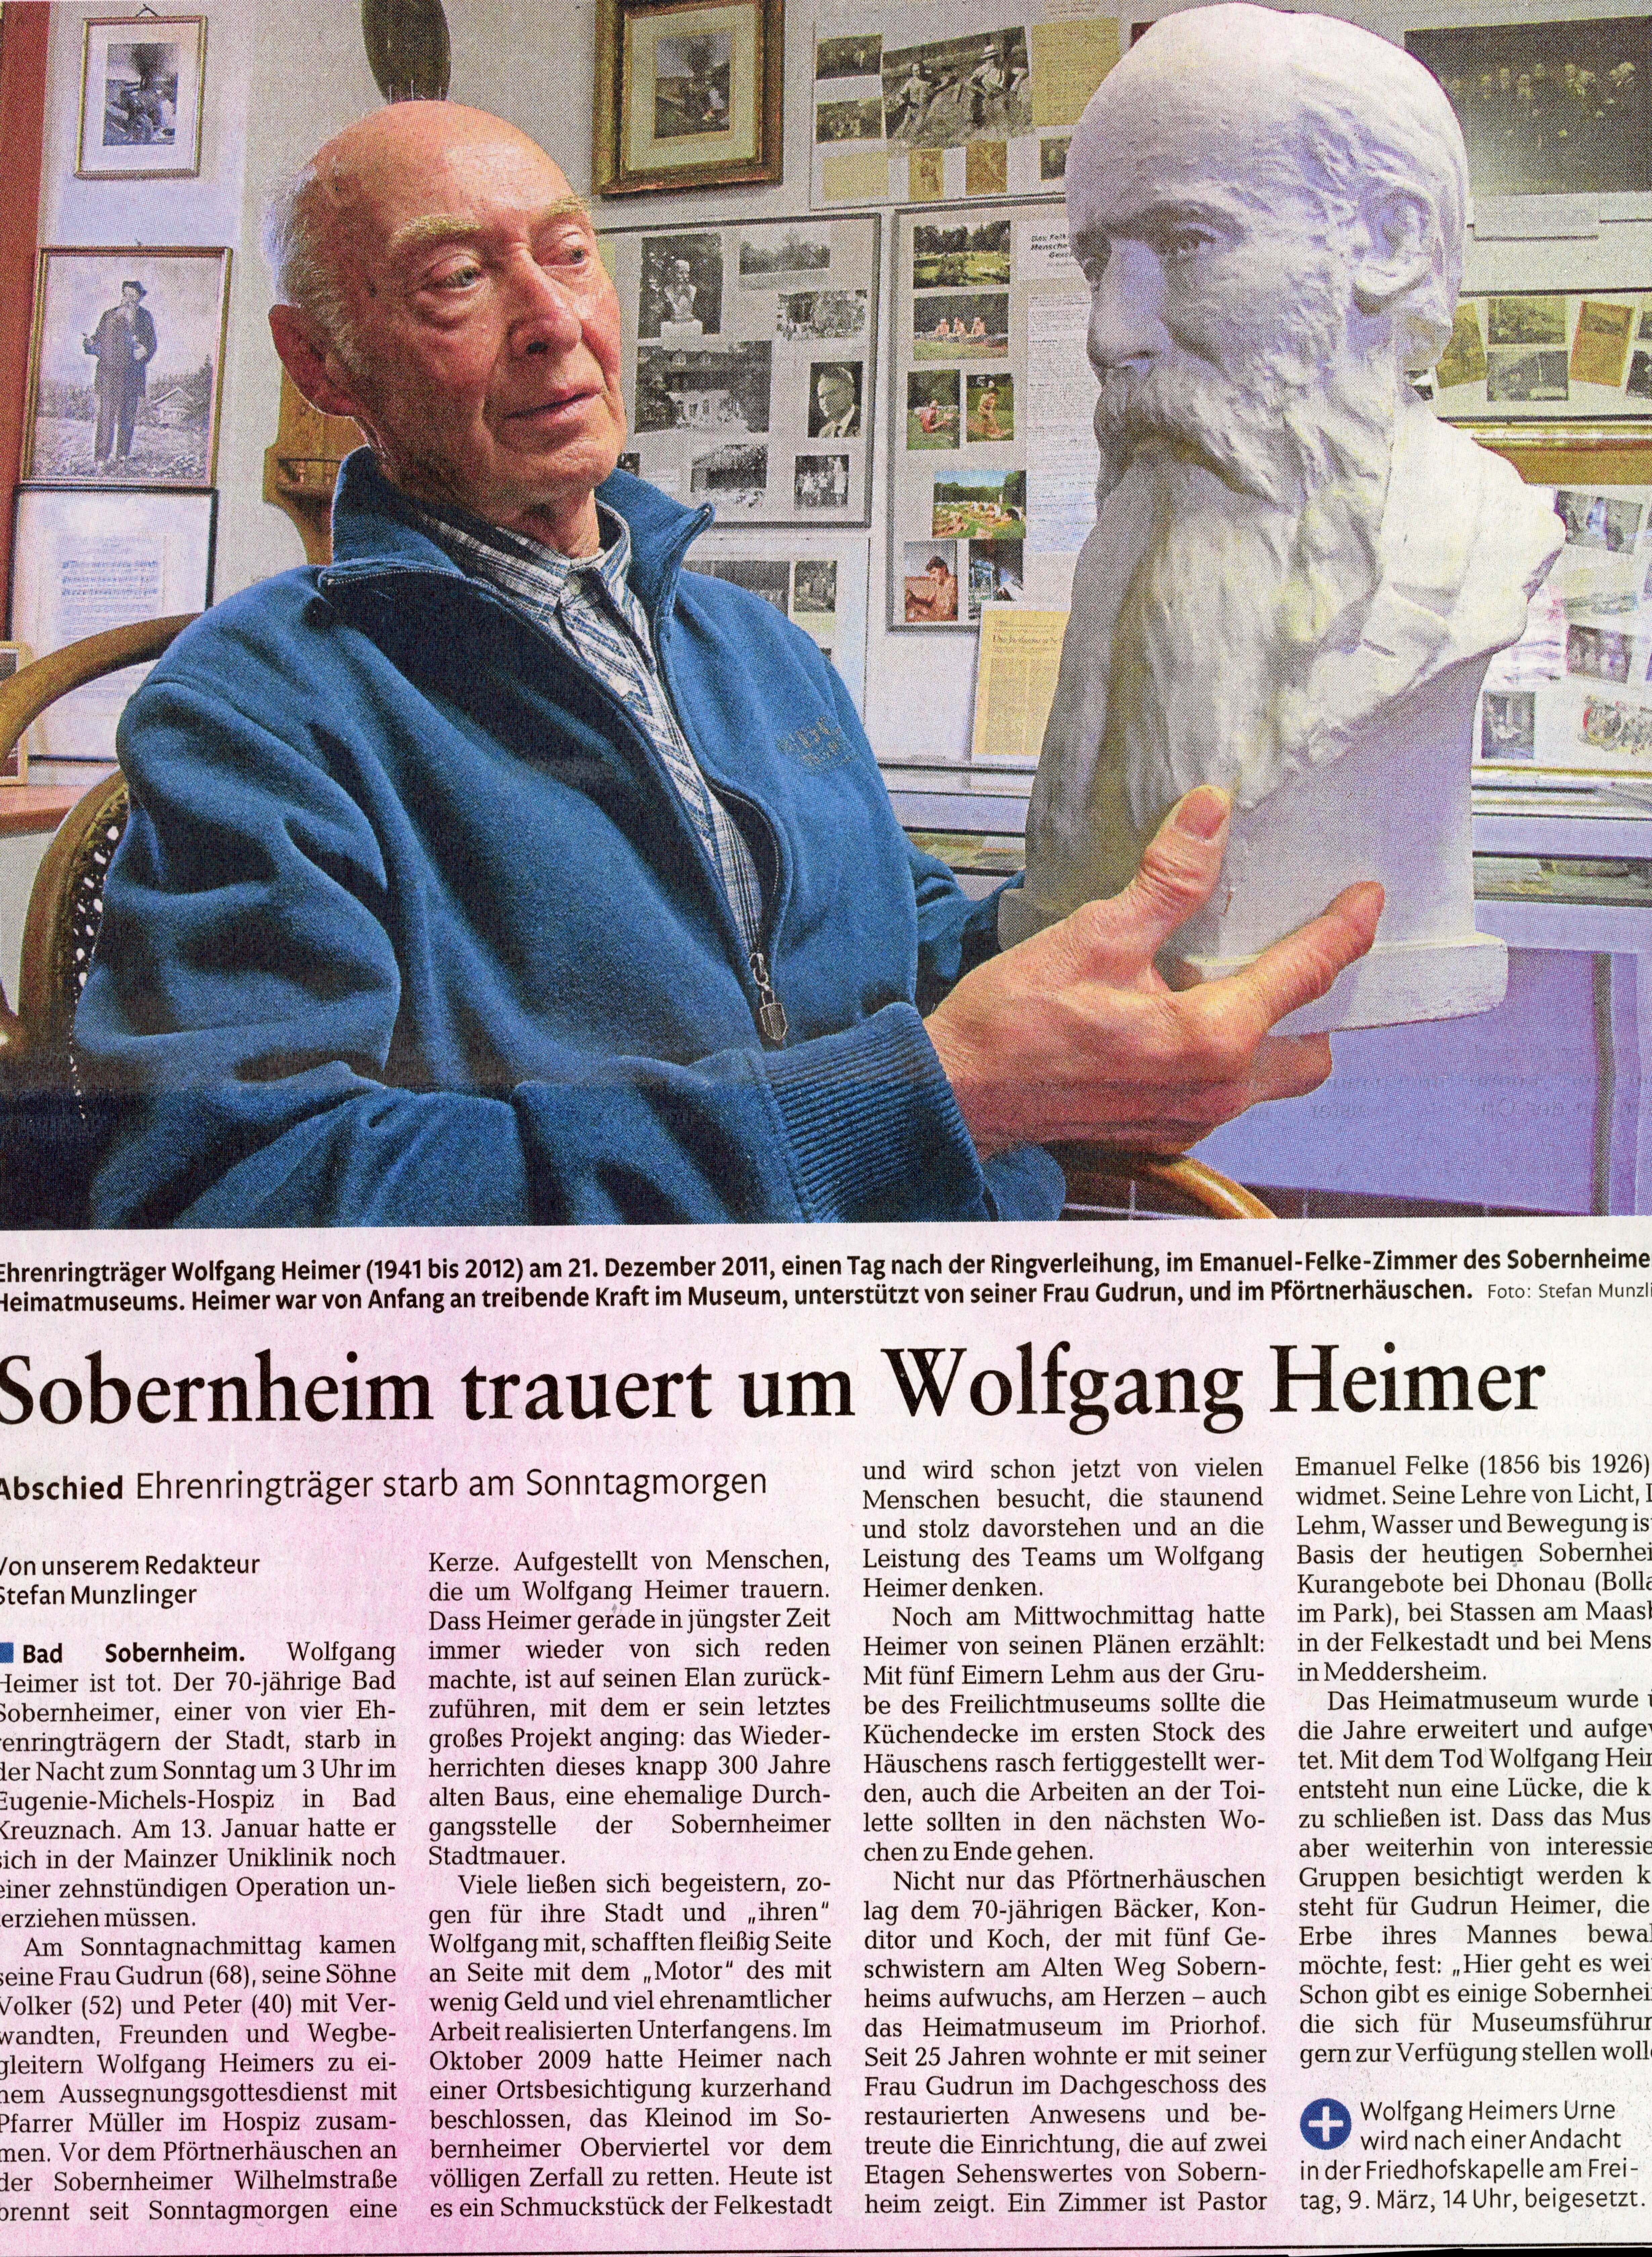 Sobernheimer trauert um Wolfgang Heimer (Heimatmuseum im Priorhof Bad Sobernheim CC BY-NC-SA)